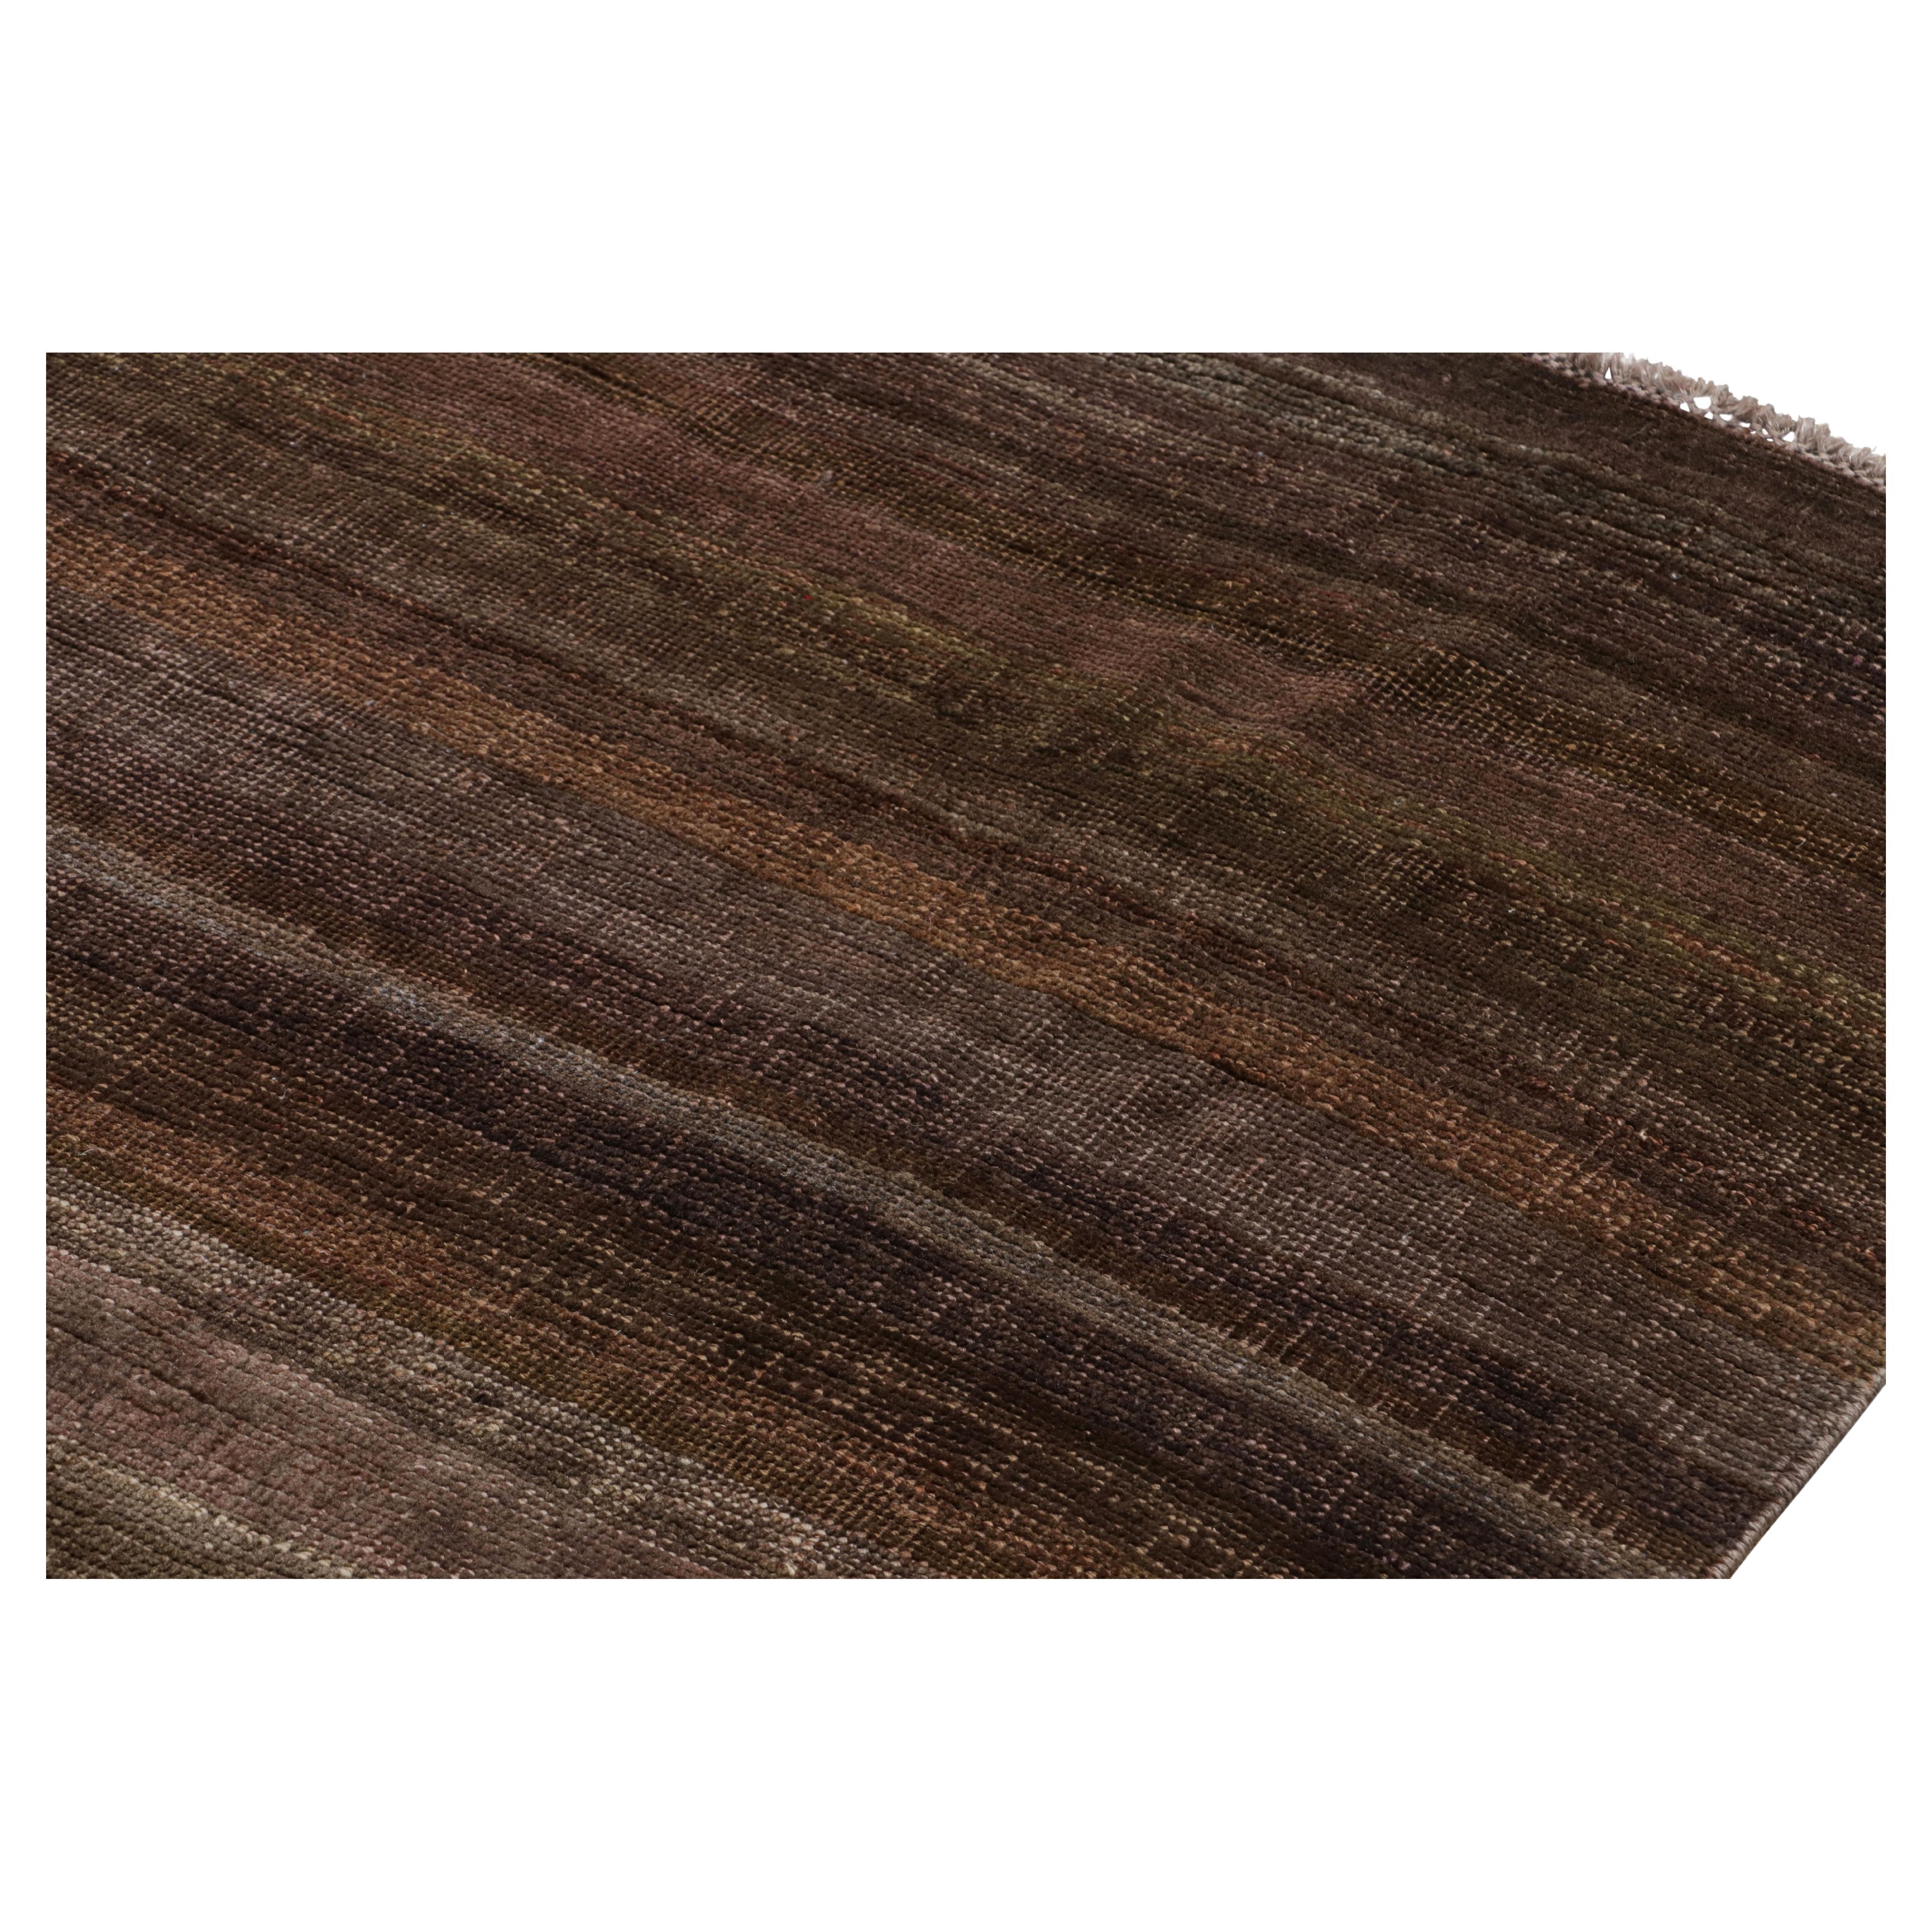 Rug & Kilim's Modern Textural Rug in Brown und Purple Stripes and Striae